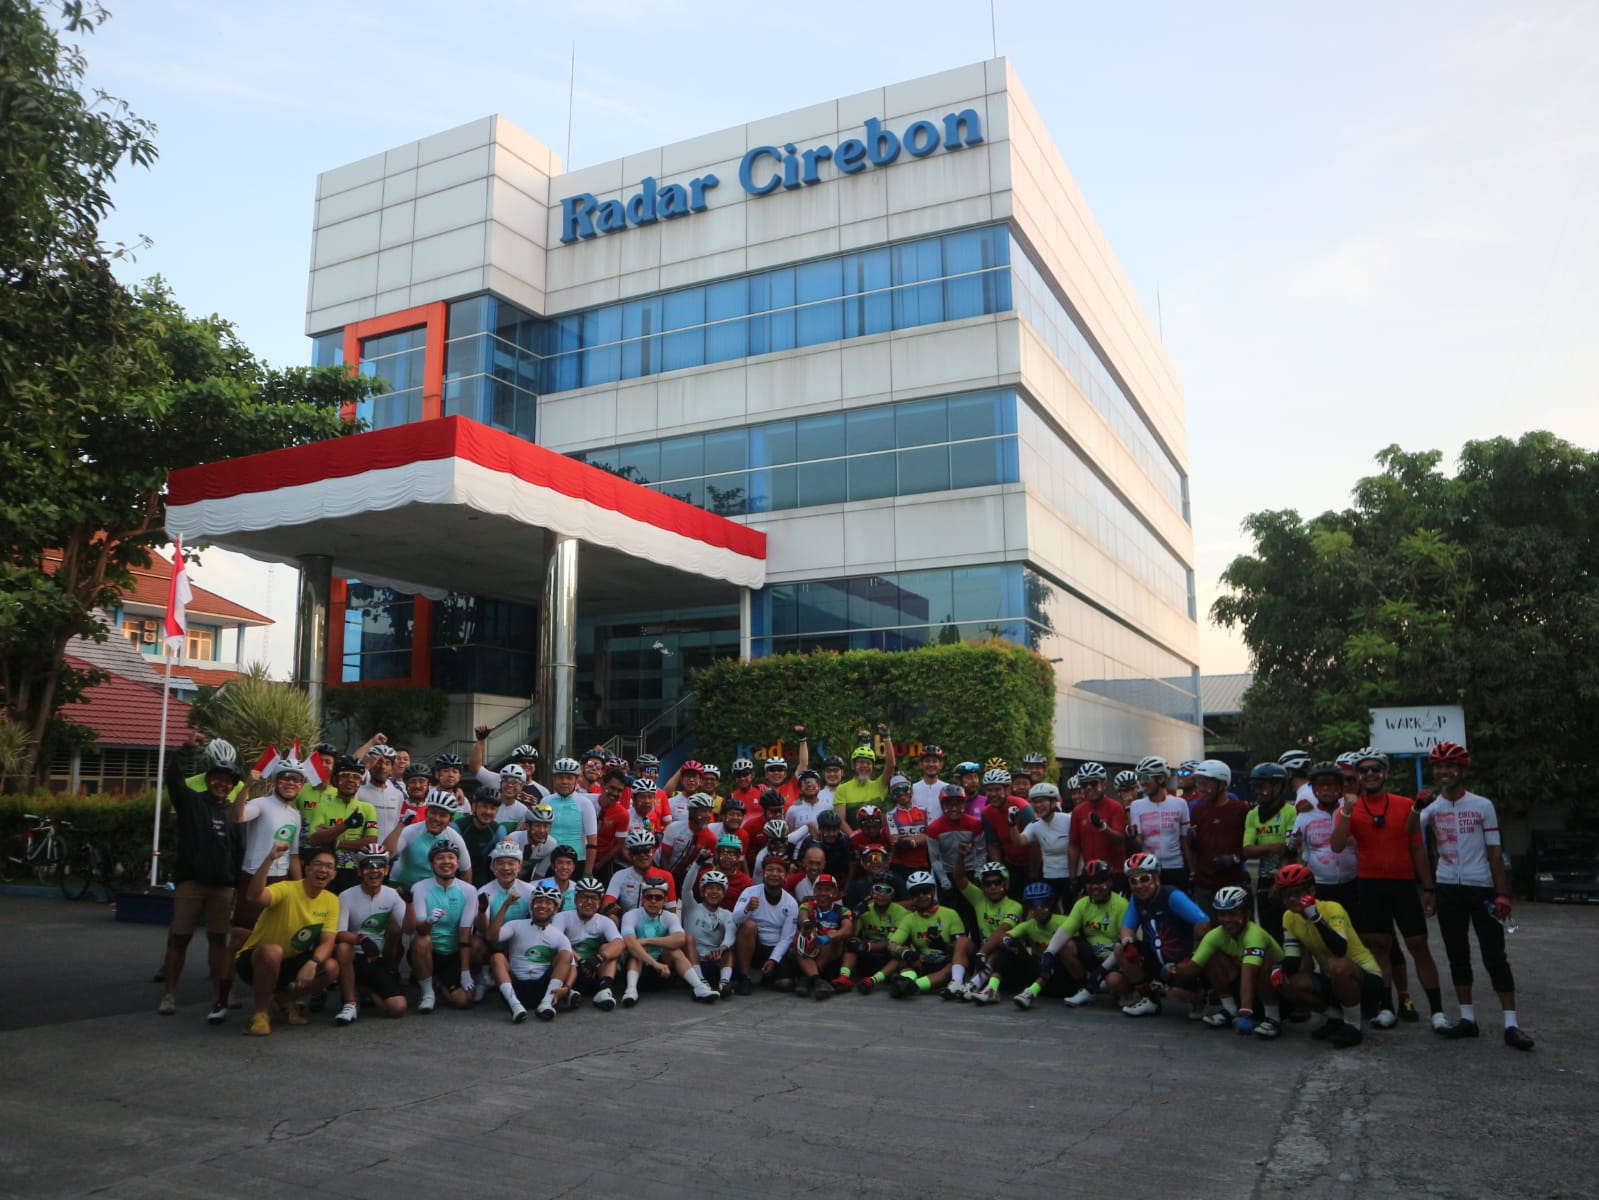 Peringati Kemerdekaan, 7 Komunitas Gowes Bareng, Start di Radar Cirebon - Plangon - Race ke Tugu Ikan